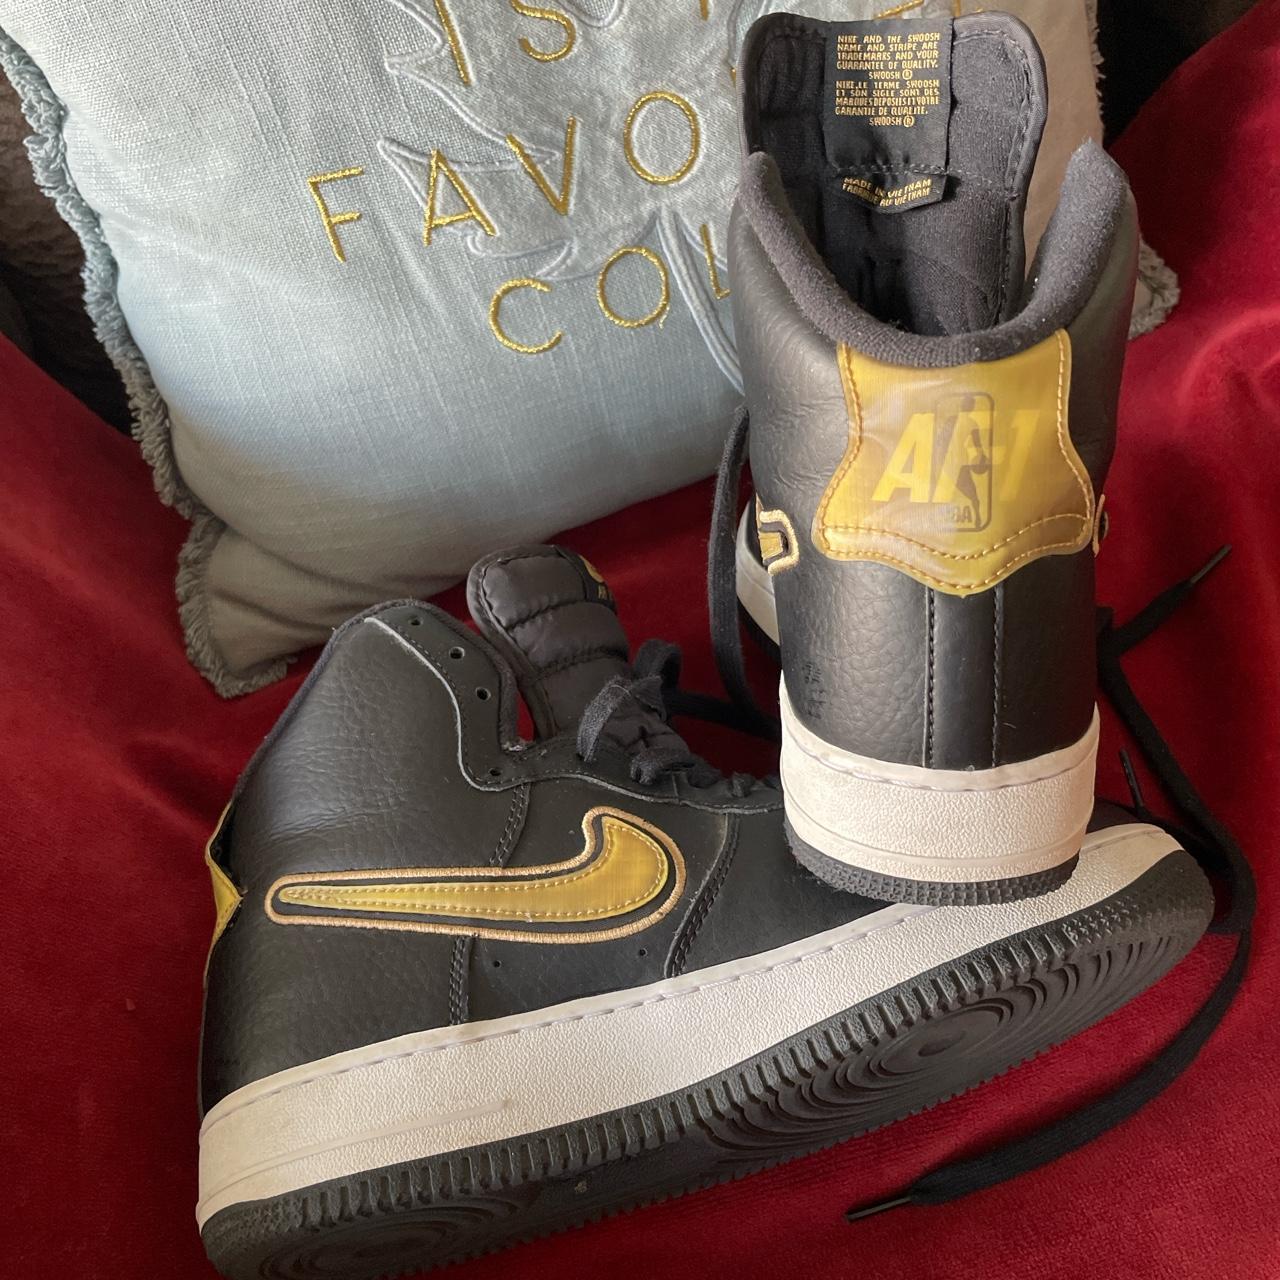 BUY Nike Air Force 1 High NBA Black Metallic Gold